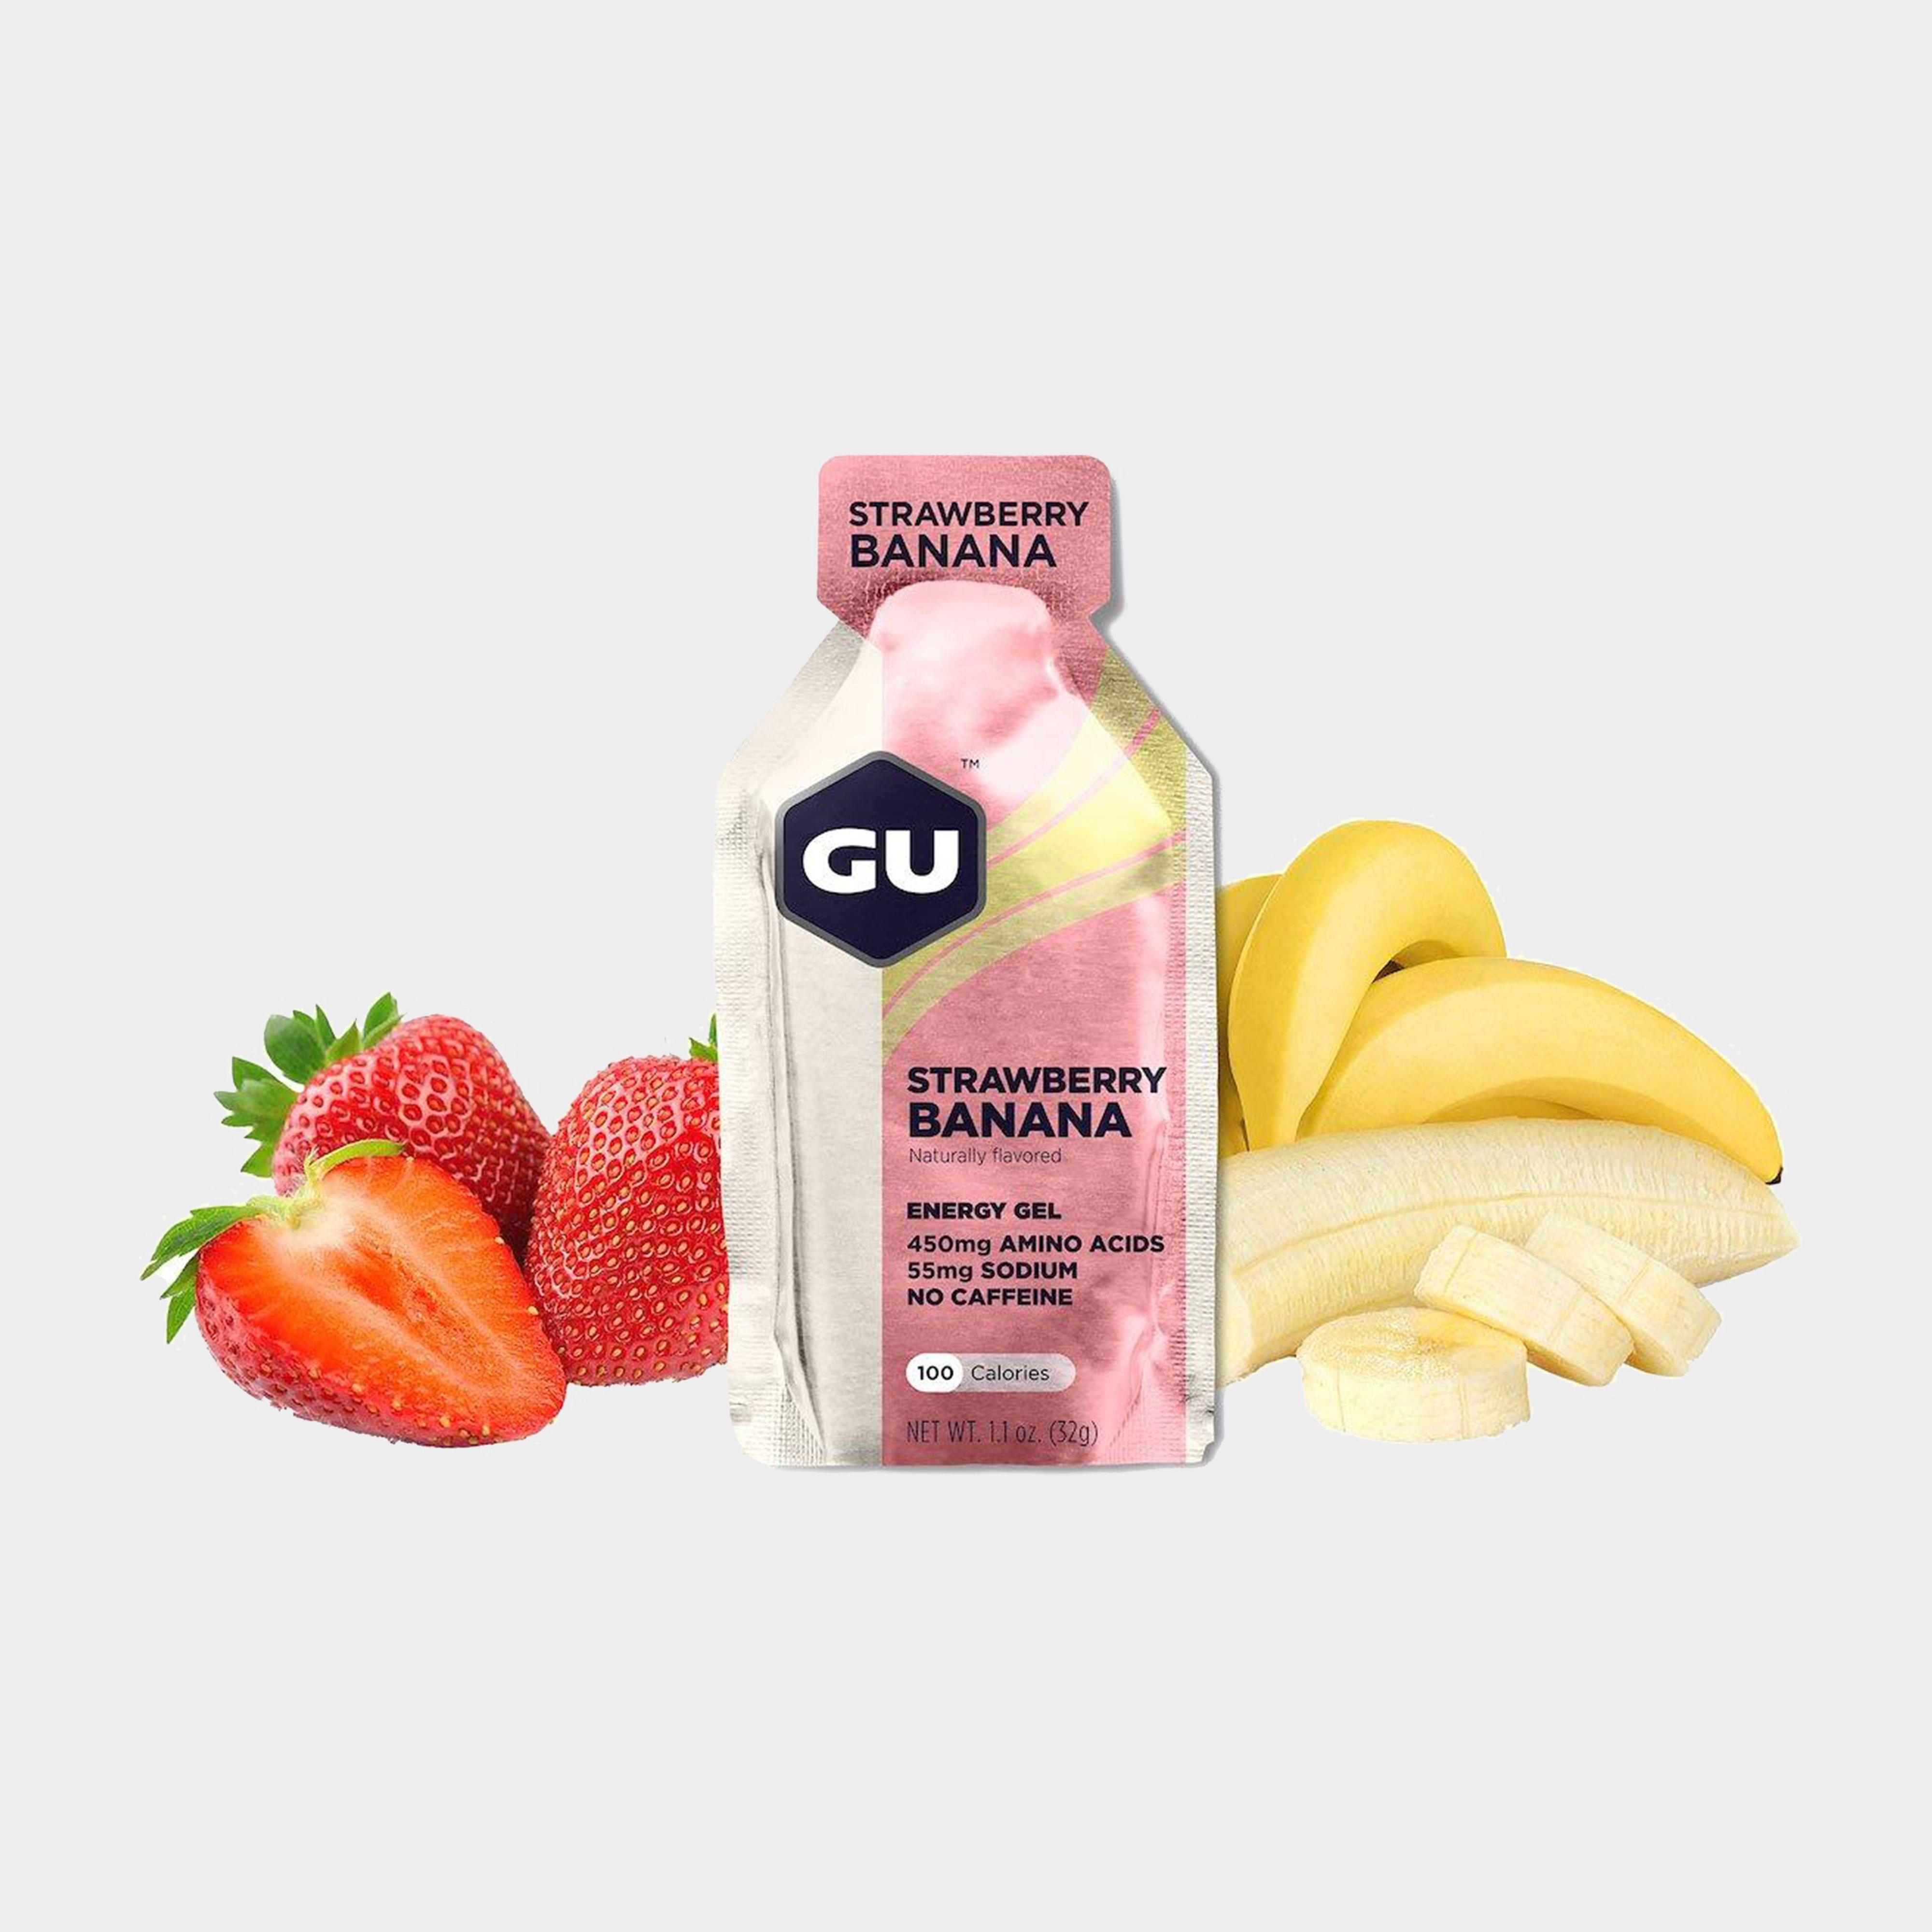 GU Energy Gel - Strawberry Banana Review